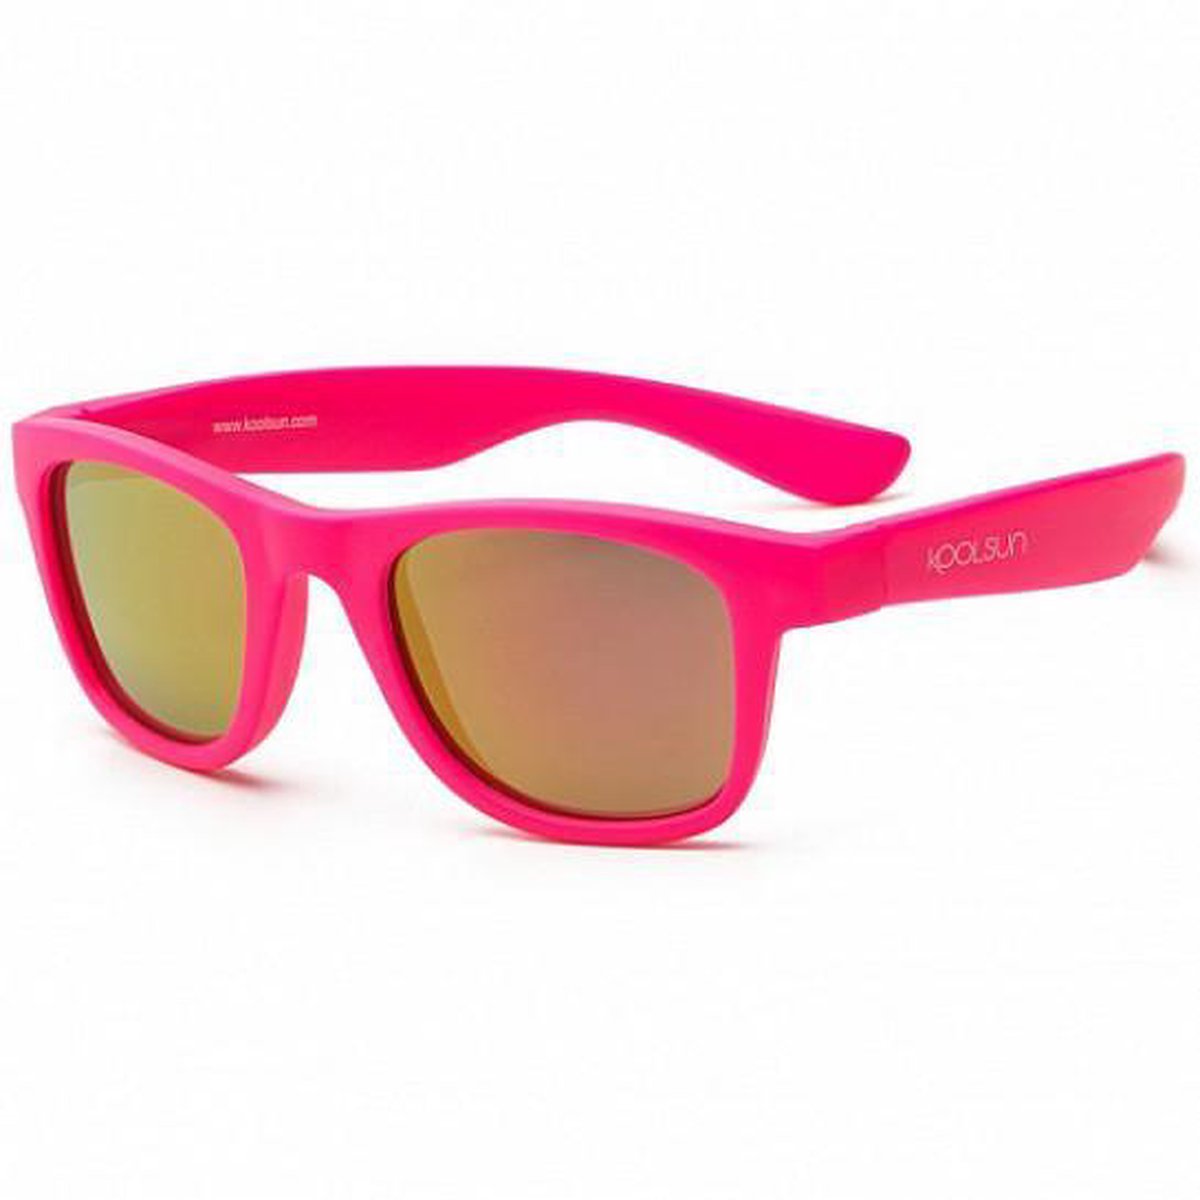 KOOLSUN® Wave - kinder zonnebril - Neon Roze - 1-5 jaar- UV400 - Categorie 3